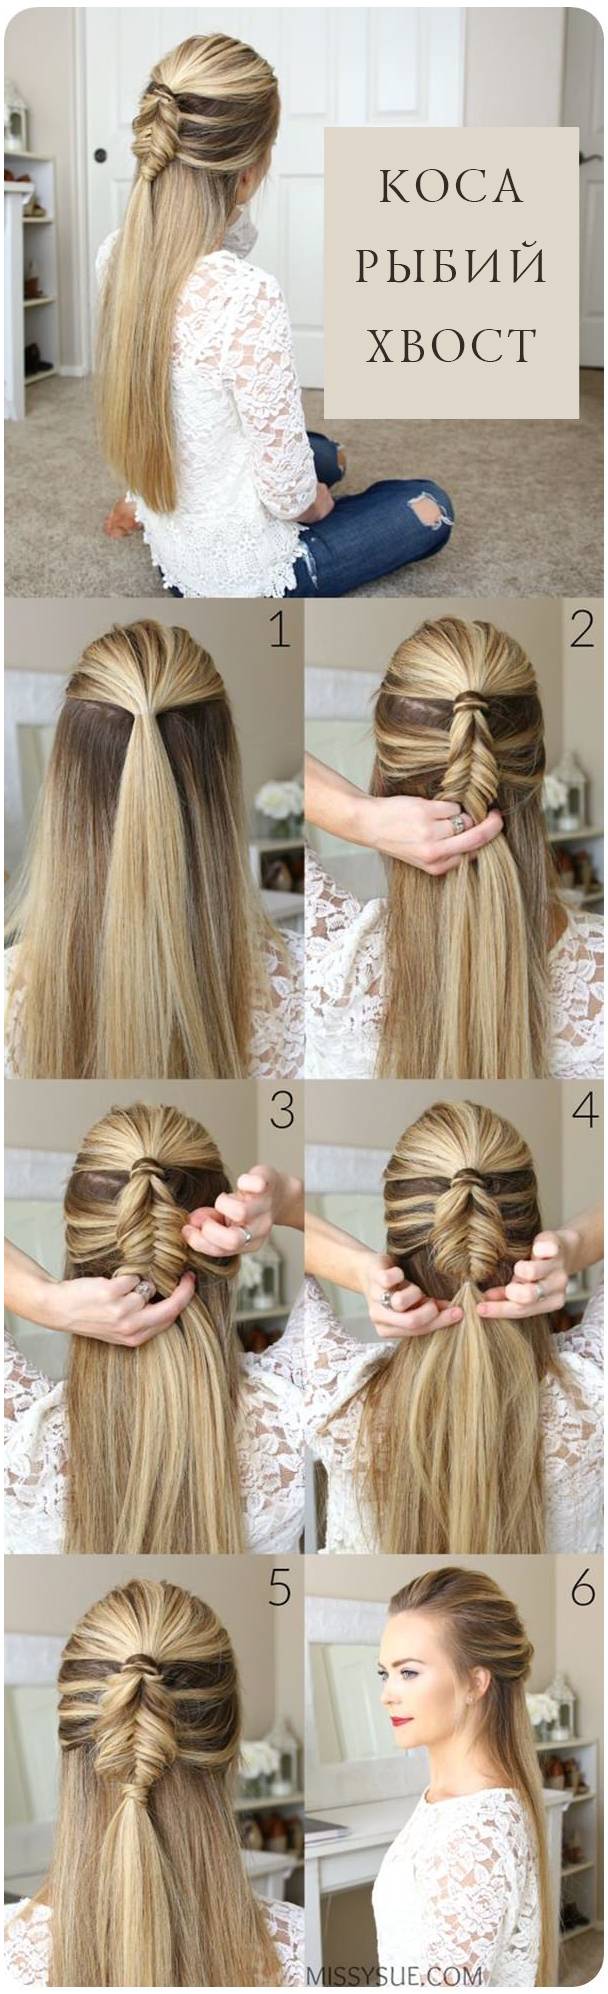 JamAdvice_com_ua_hairstyles-with-braids-for-long-hair-21